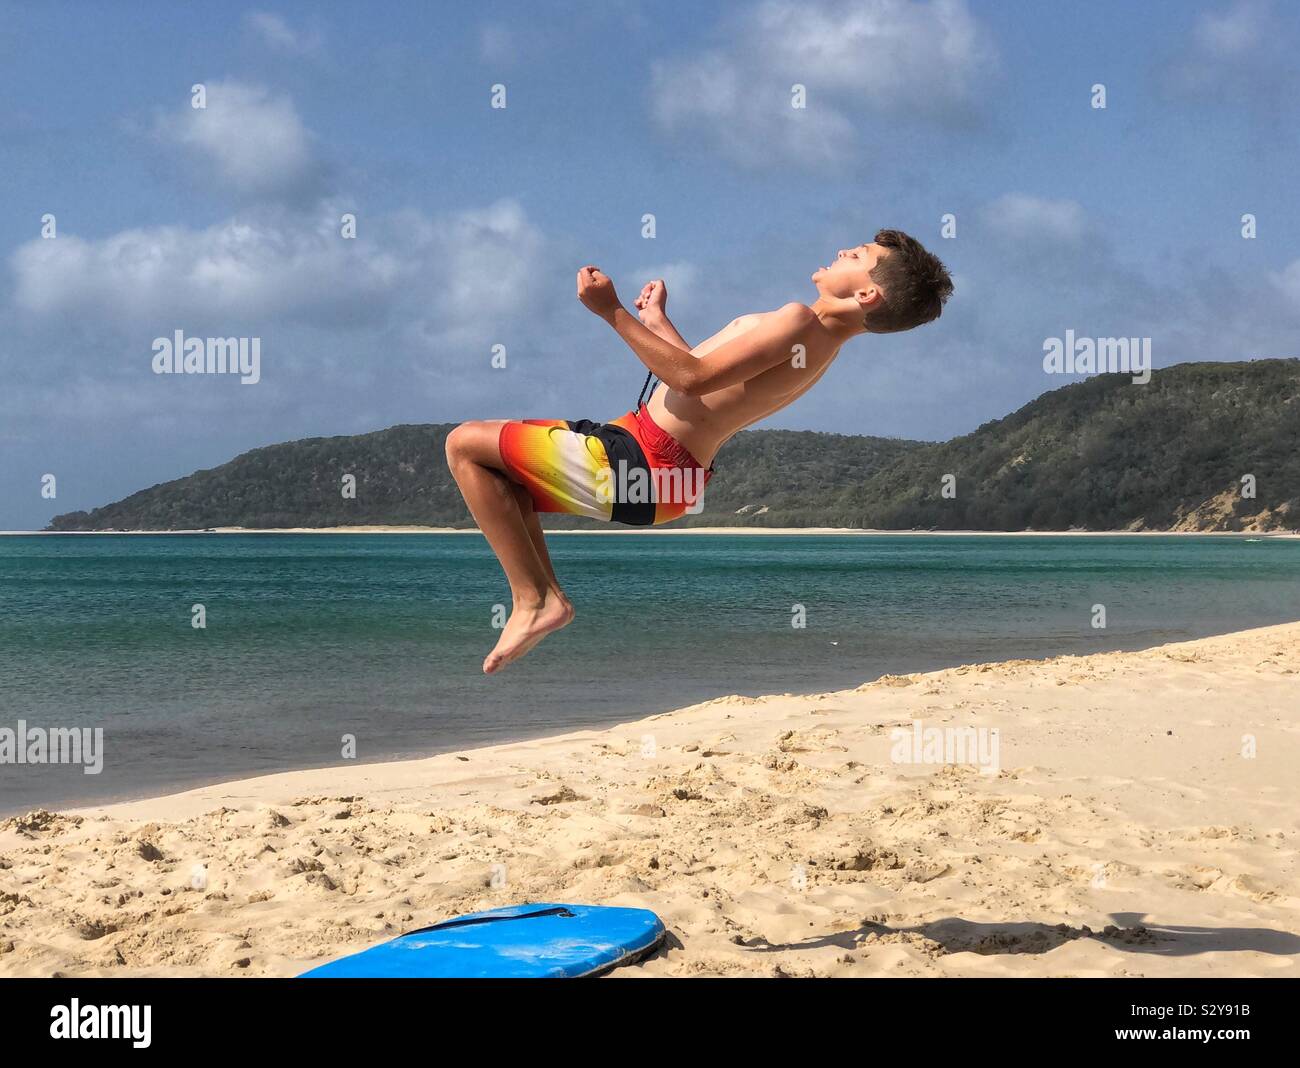 Kinder spielen am Strand backflip Saltos tumbling Stockfoto